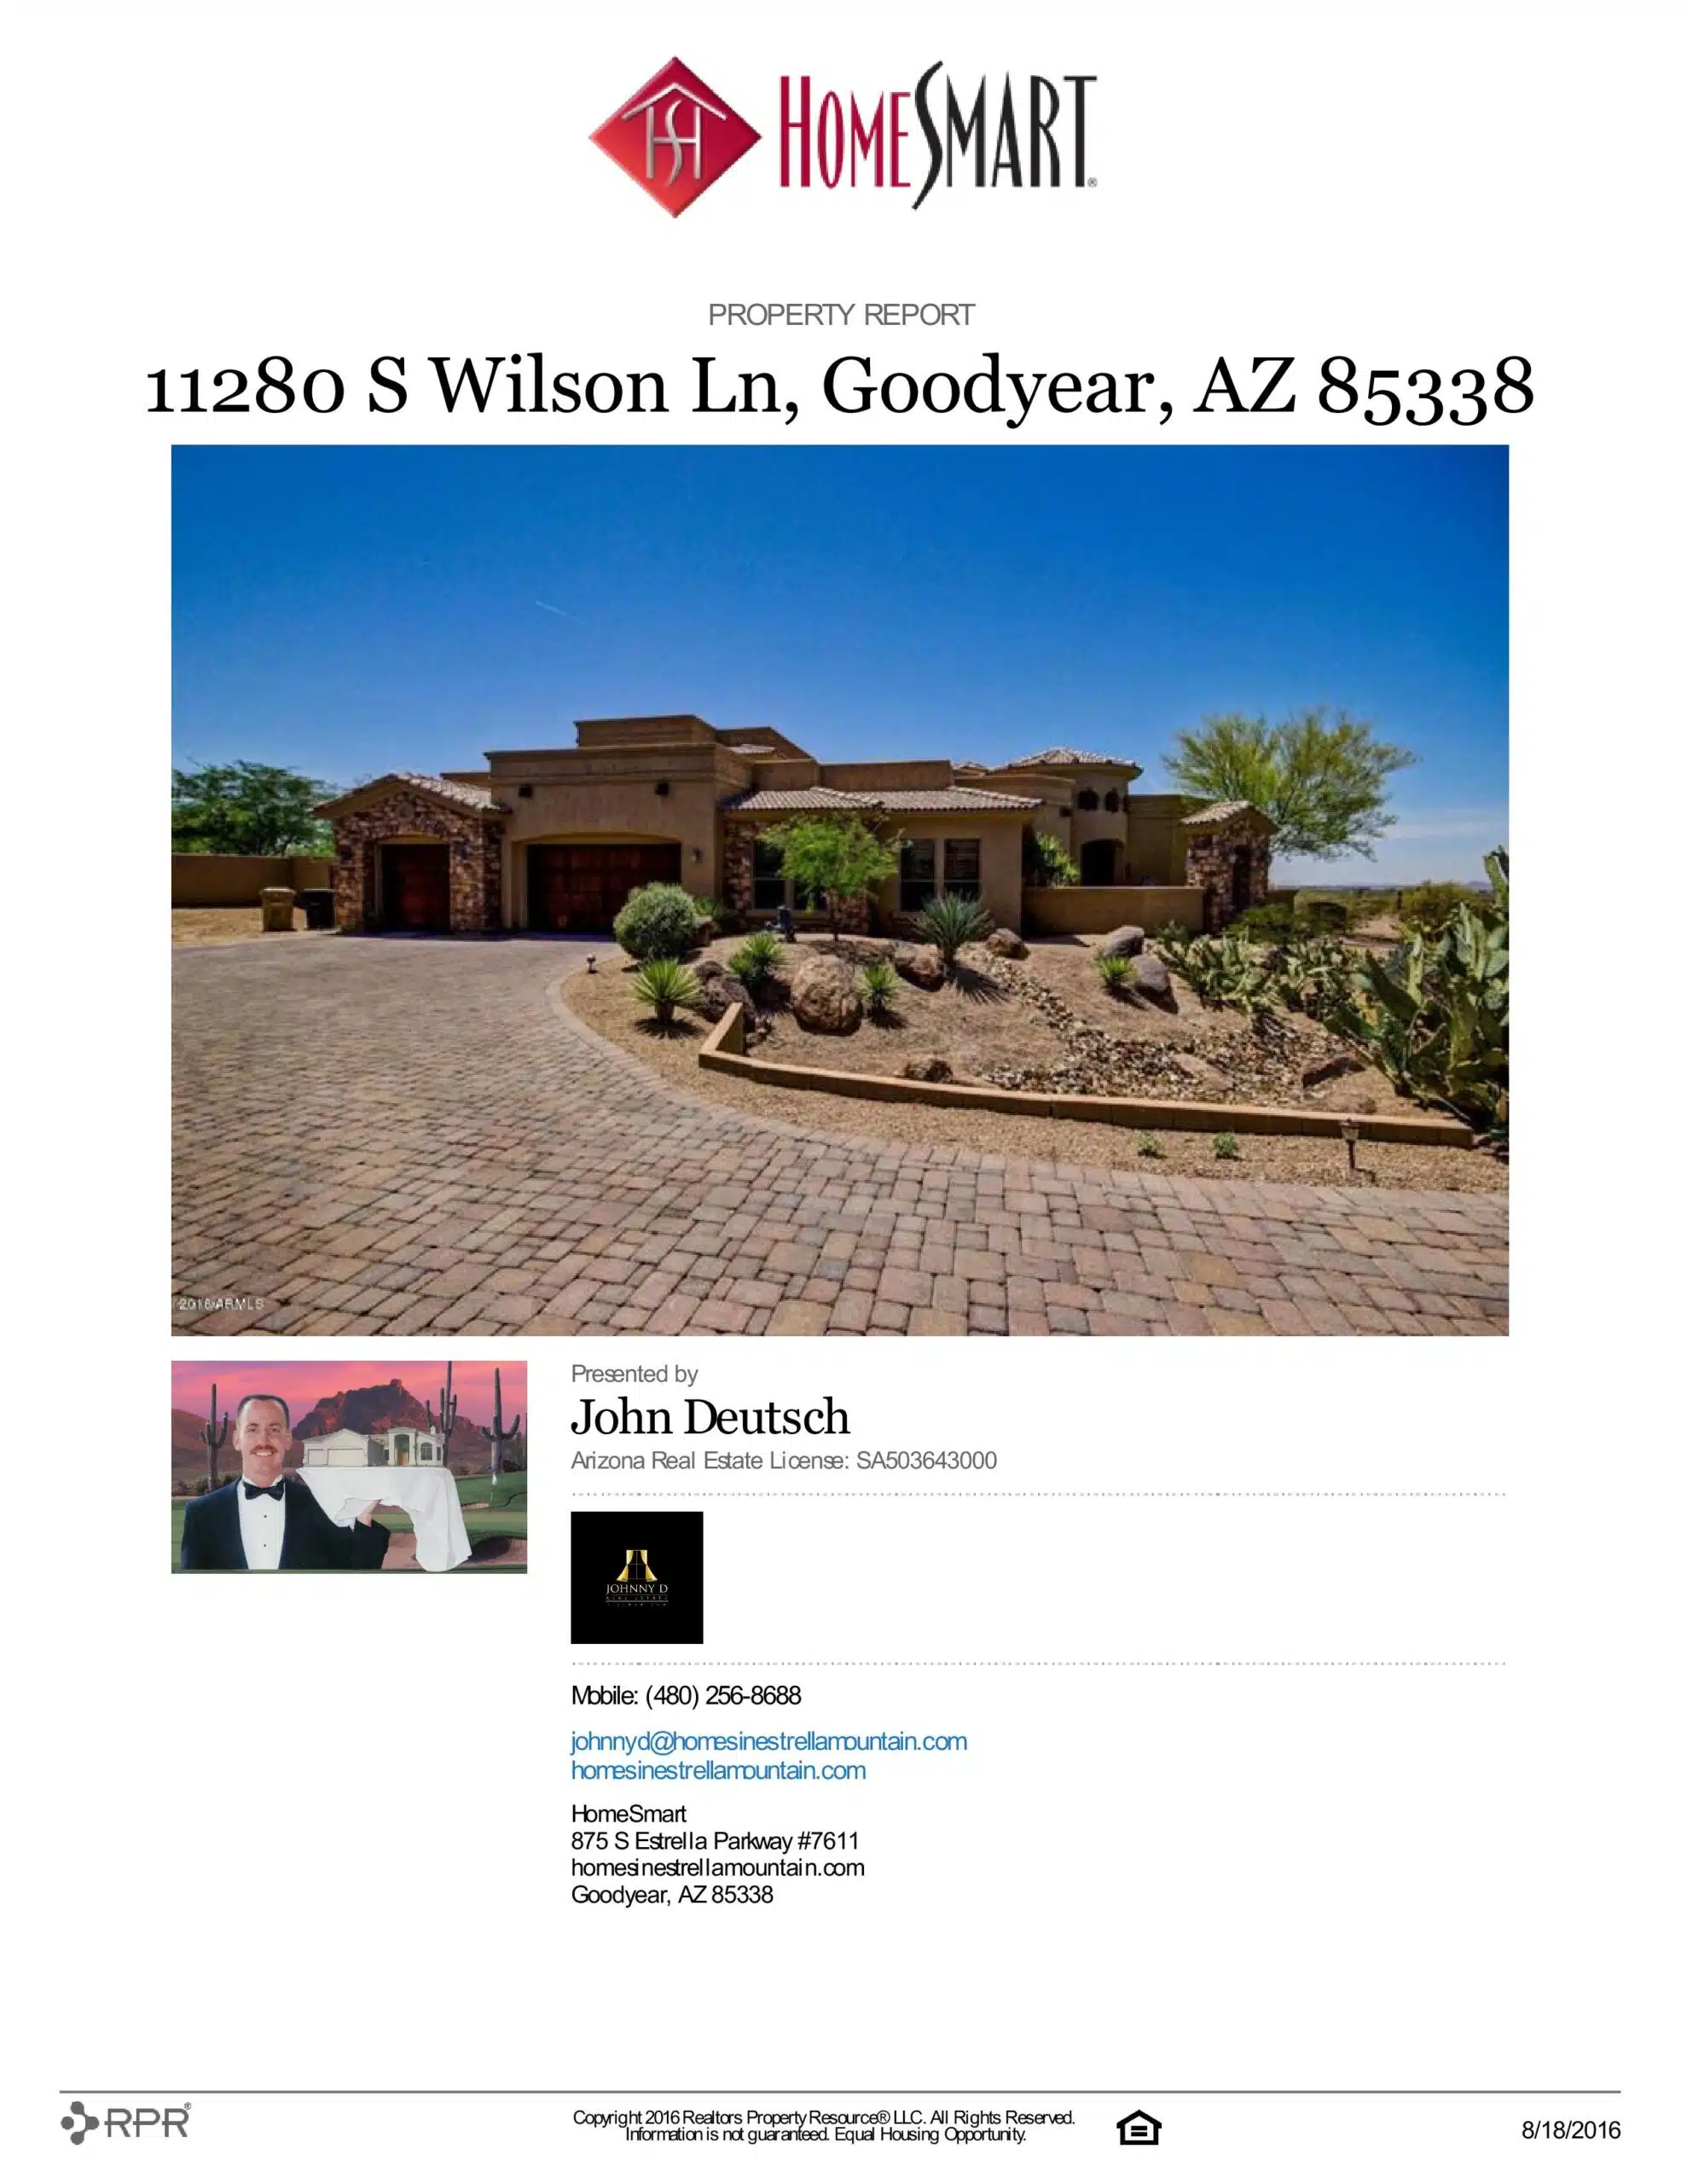 Property-Report_11280-S-Wilson-Ln-Goodyear-AZ-85338_2016-08-18-09-48-03-page-001